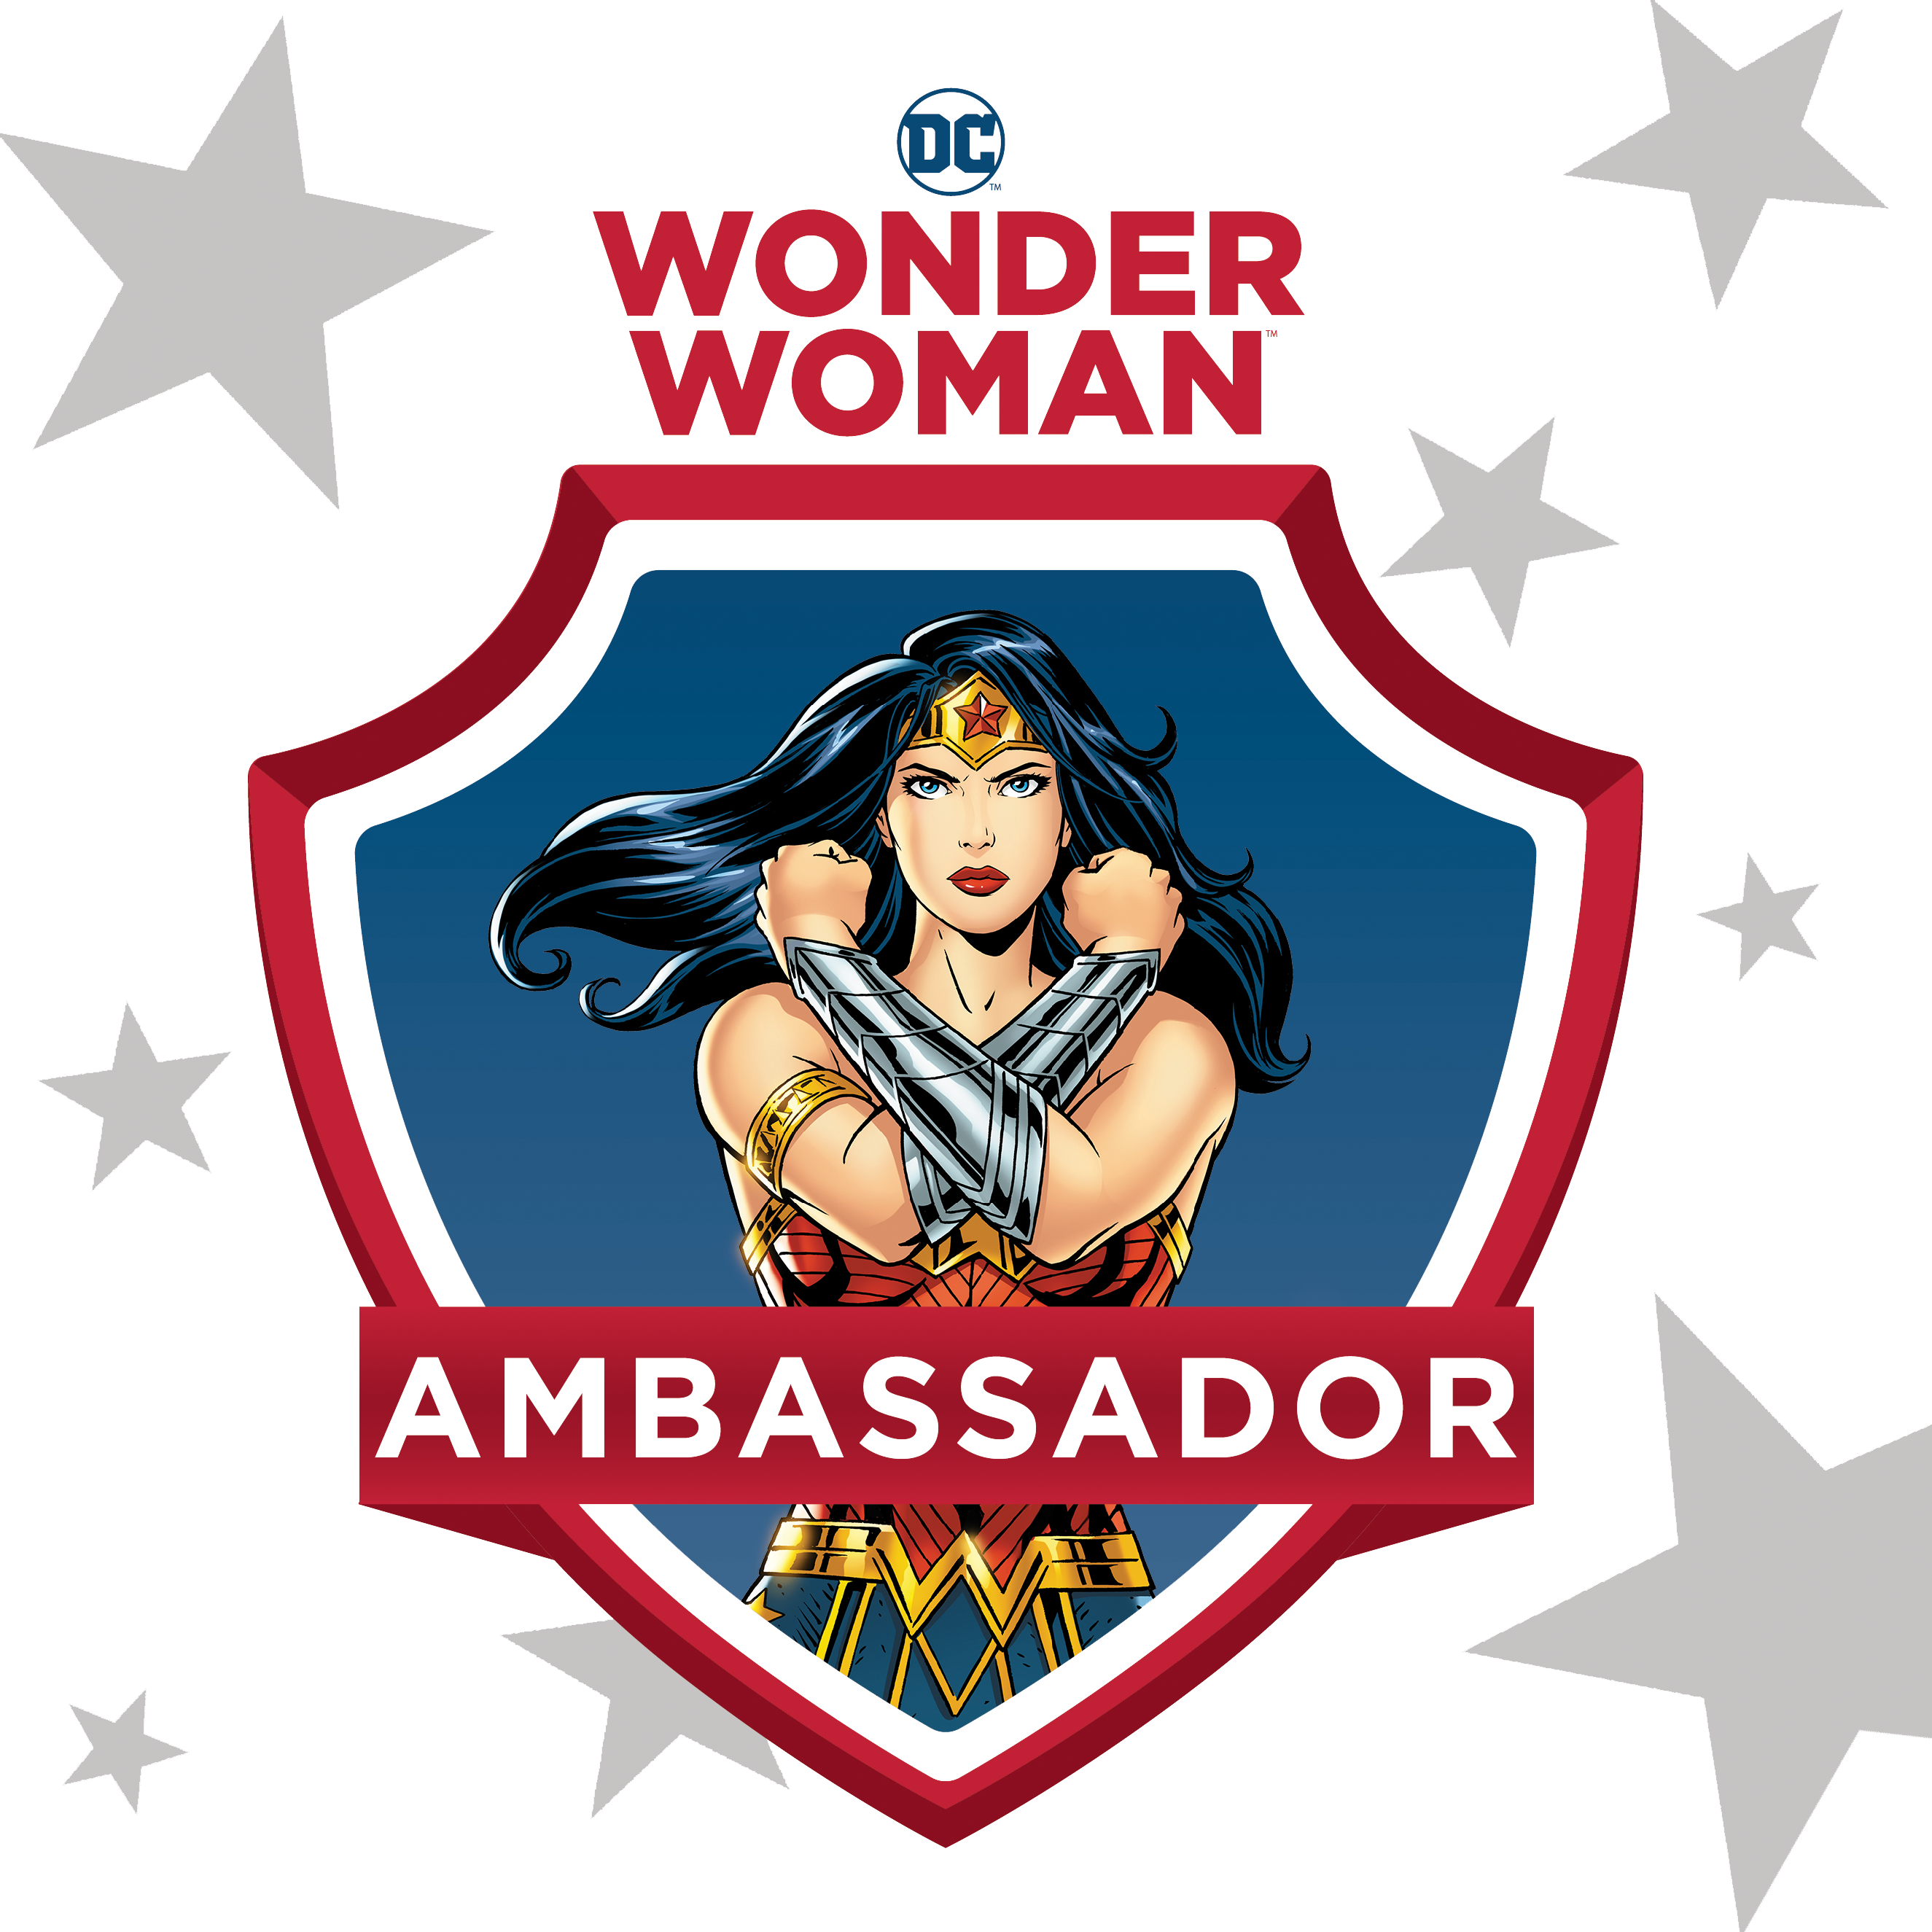 Come check us out DC Wonder Woman Run Series